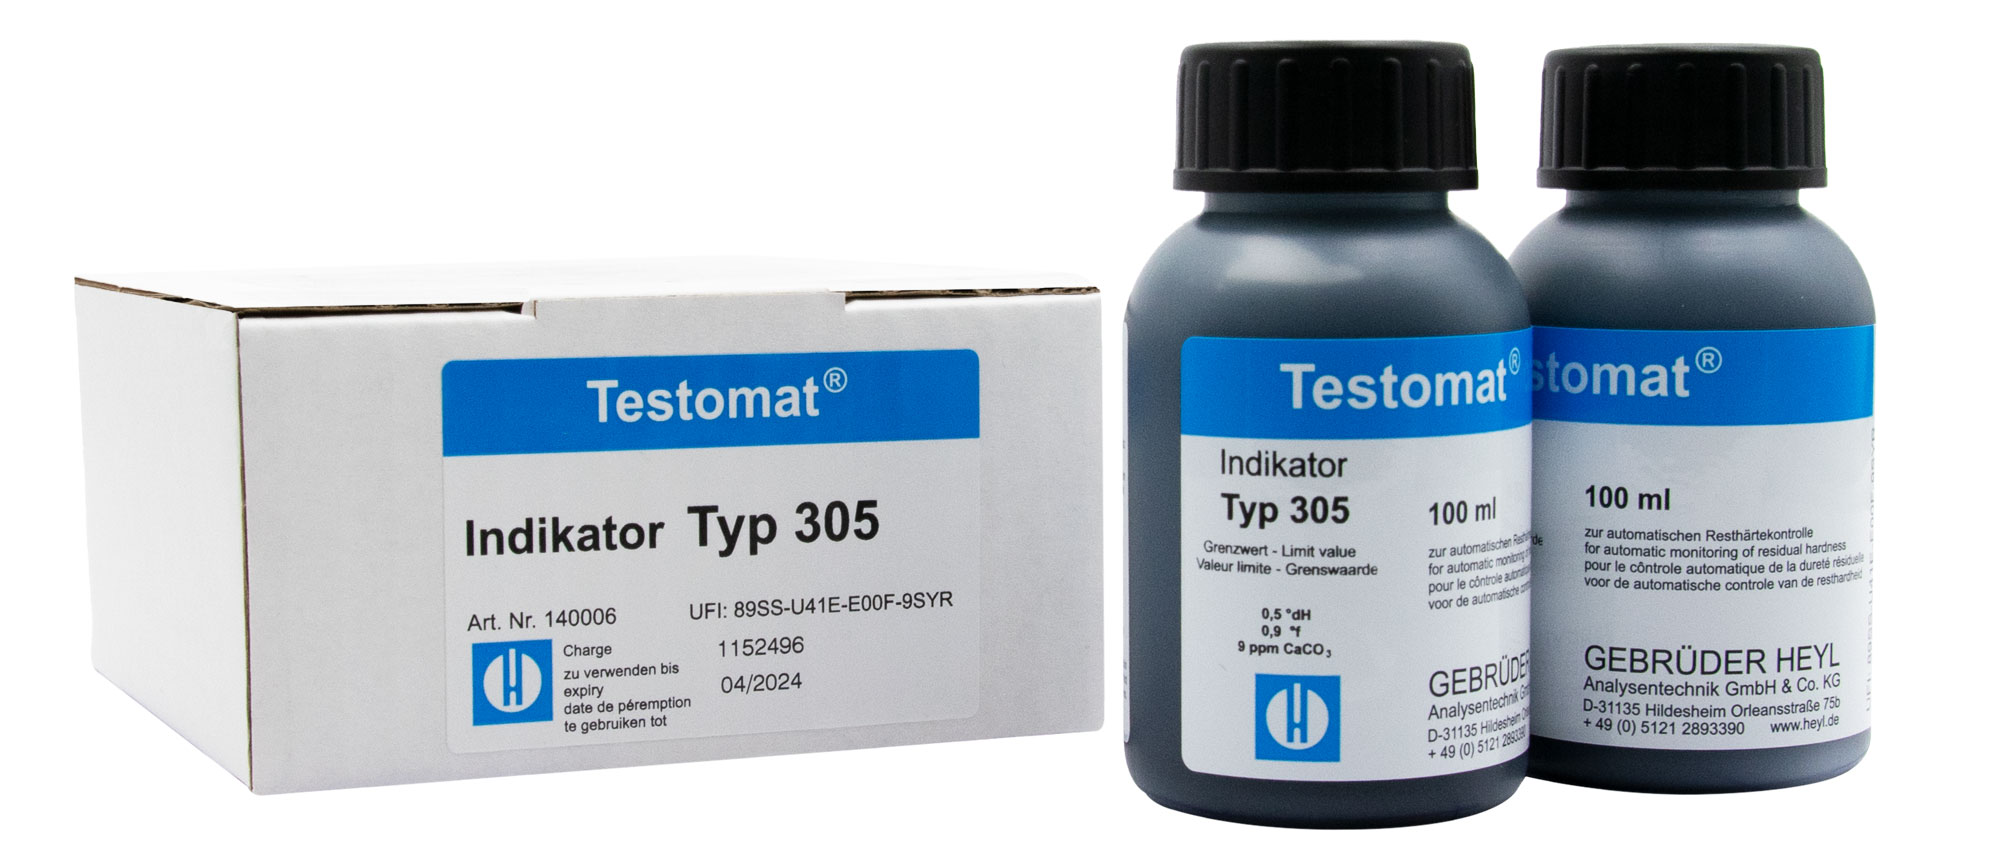 Testomat® 808 indicator 305 2 x 100 ml